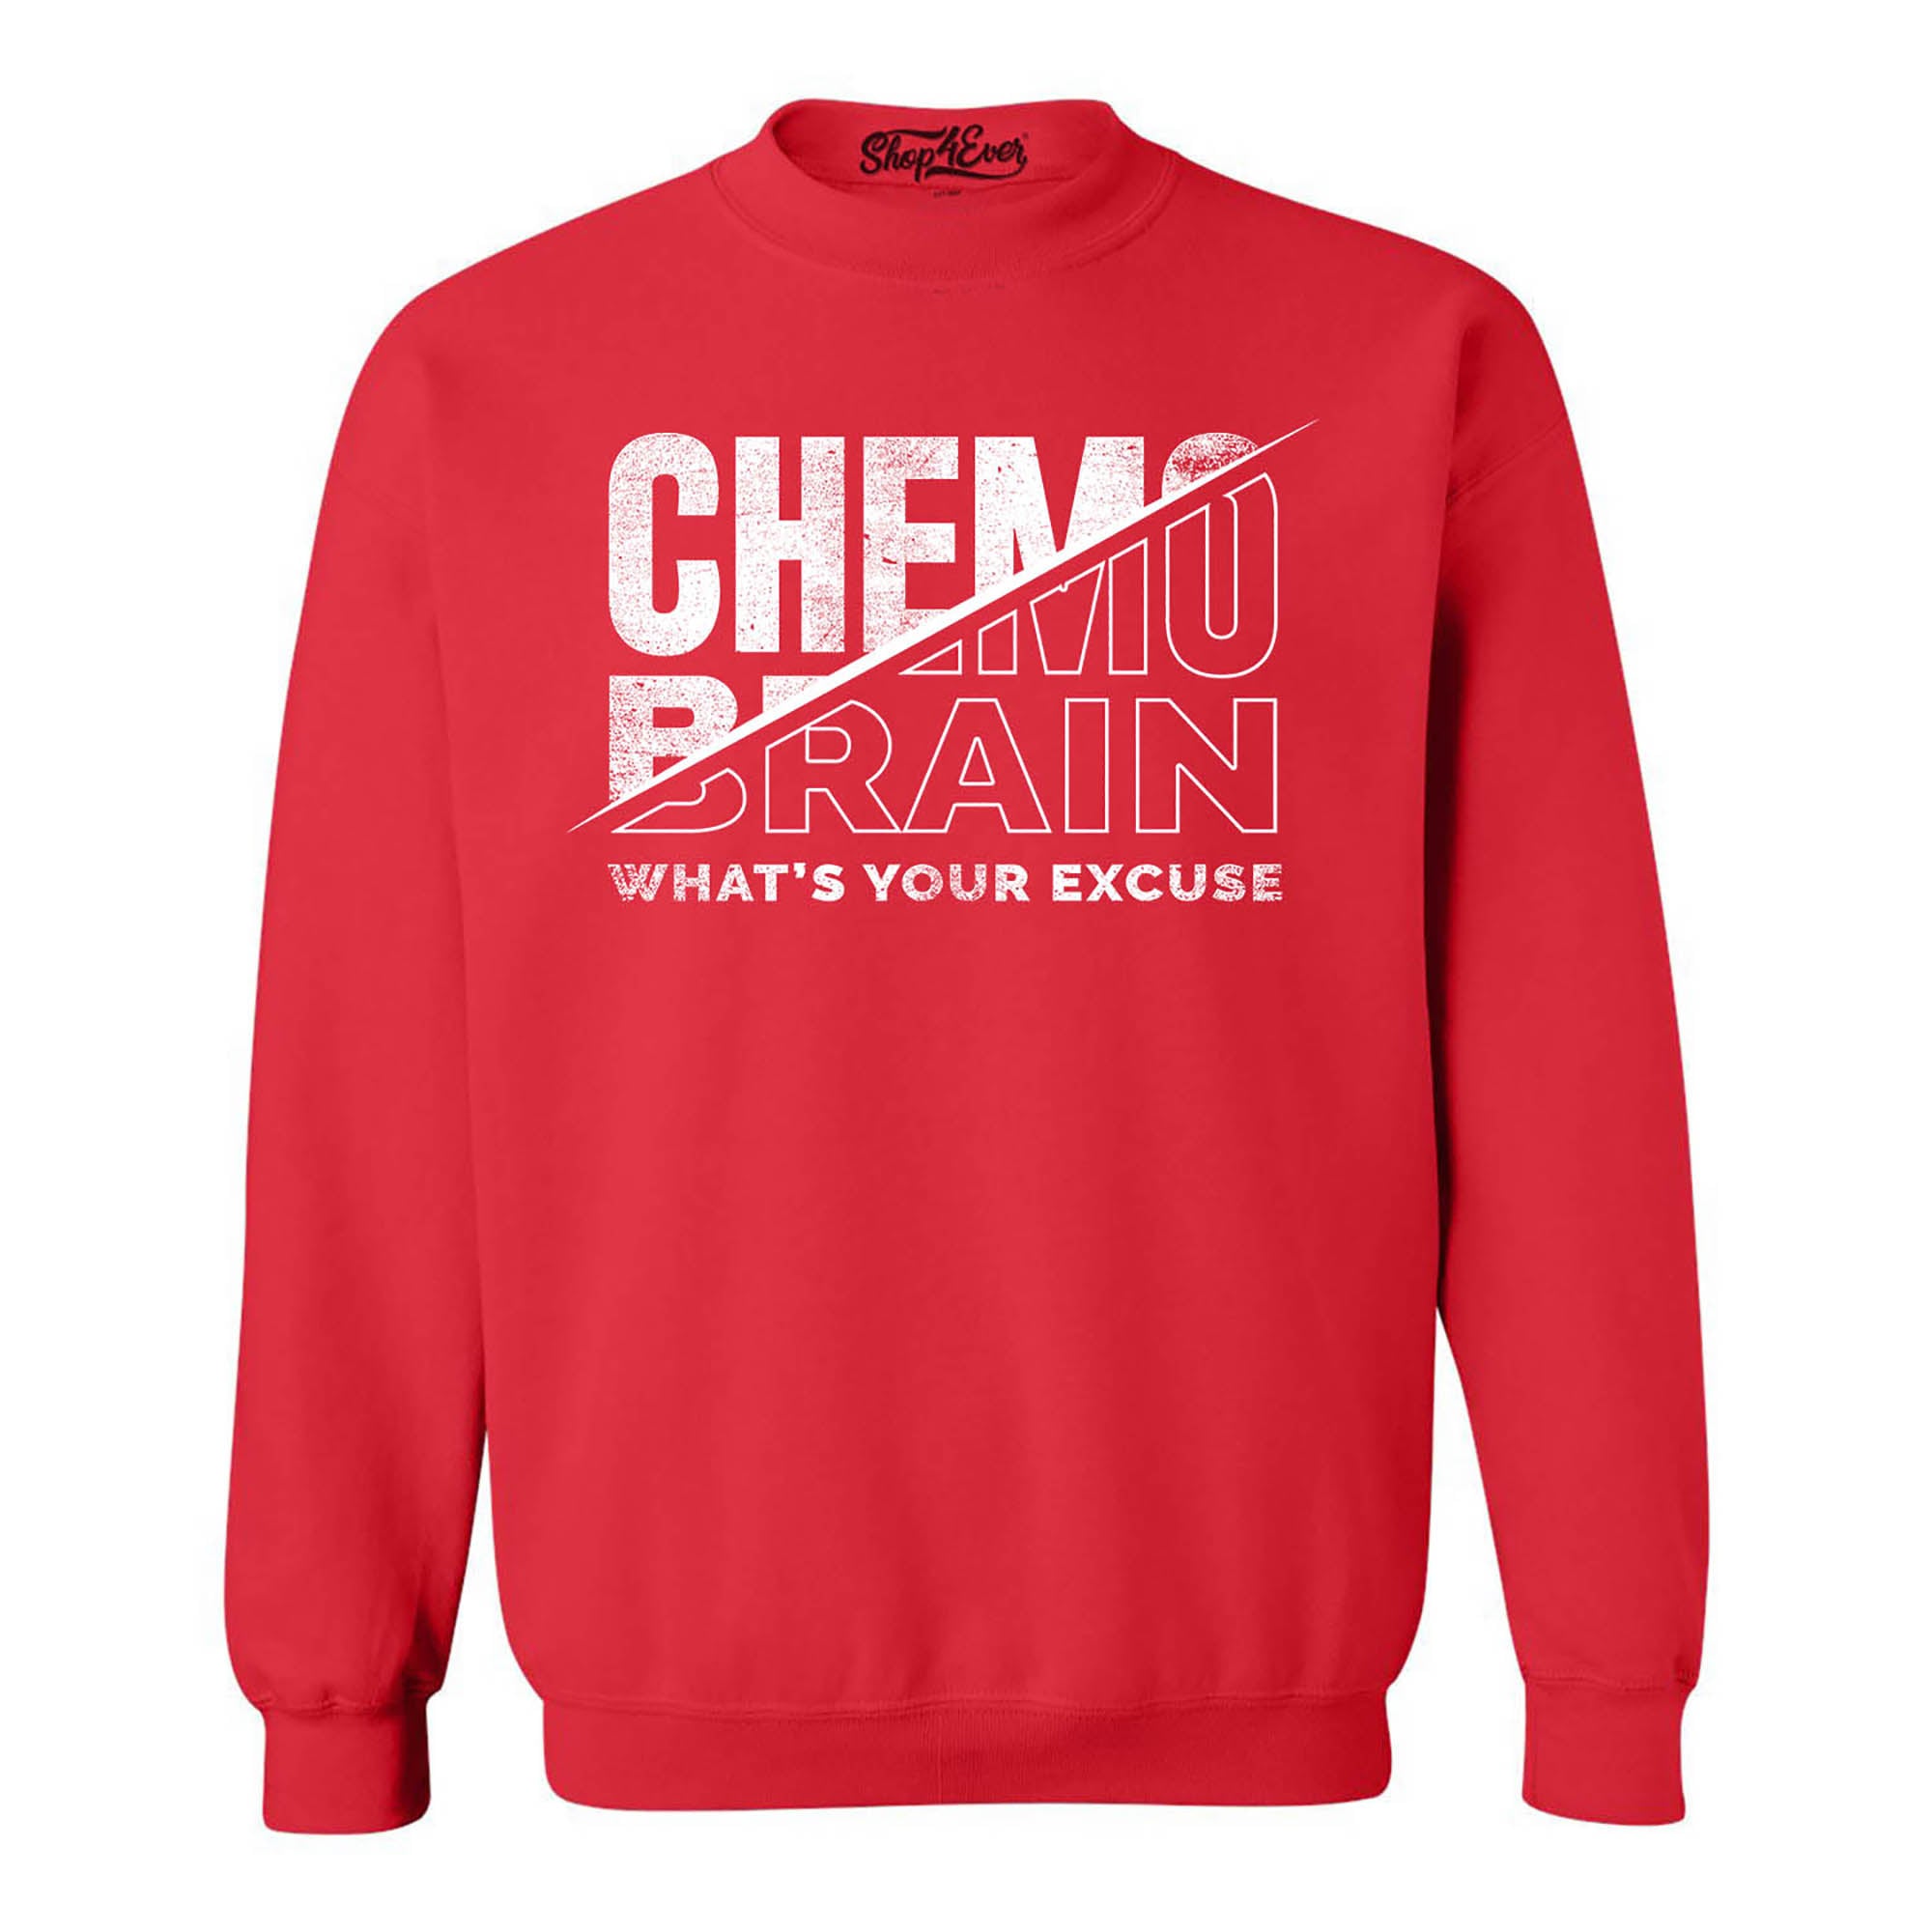 Chemo Brain What's Your Excuse? Funny Crewneck Sweatshirts